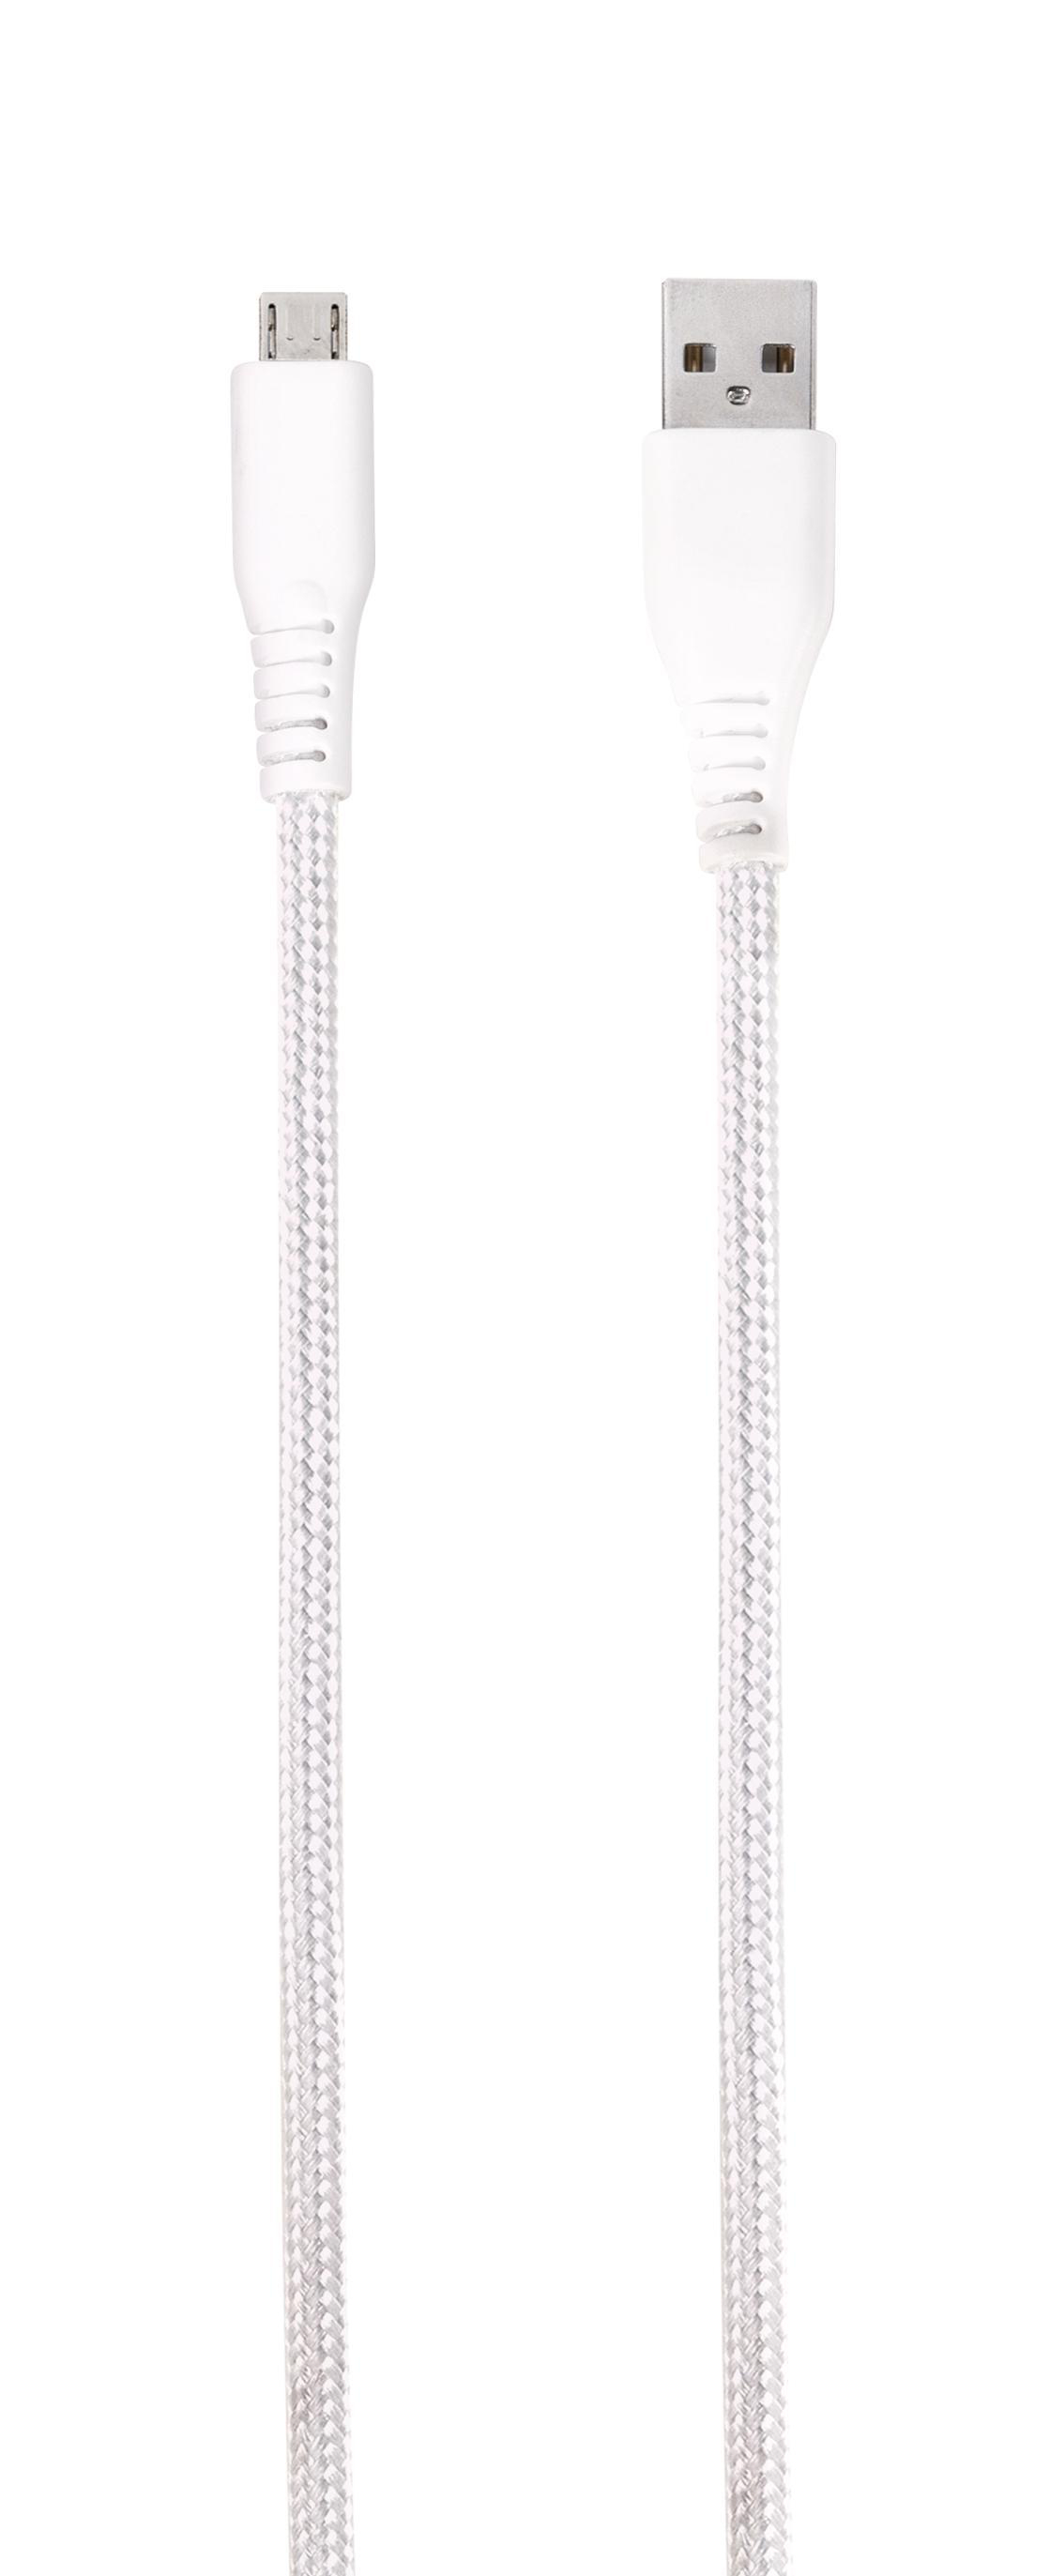 LongLife Ladekabel, VIVANCO m, Weiß 2,5 Micro-USB,